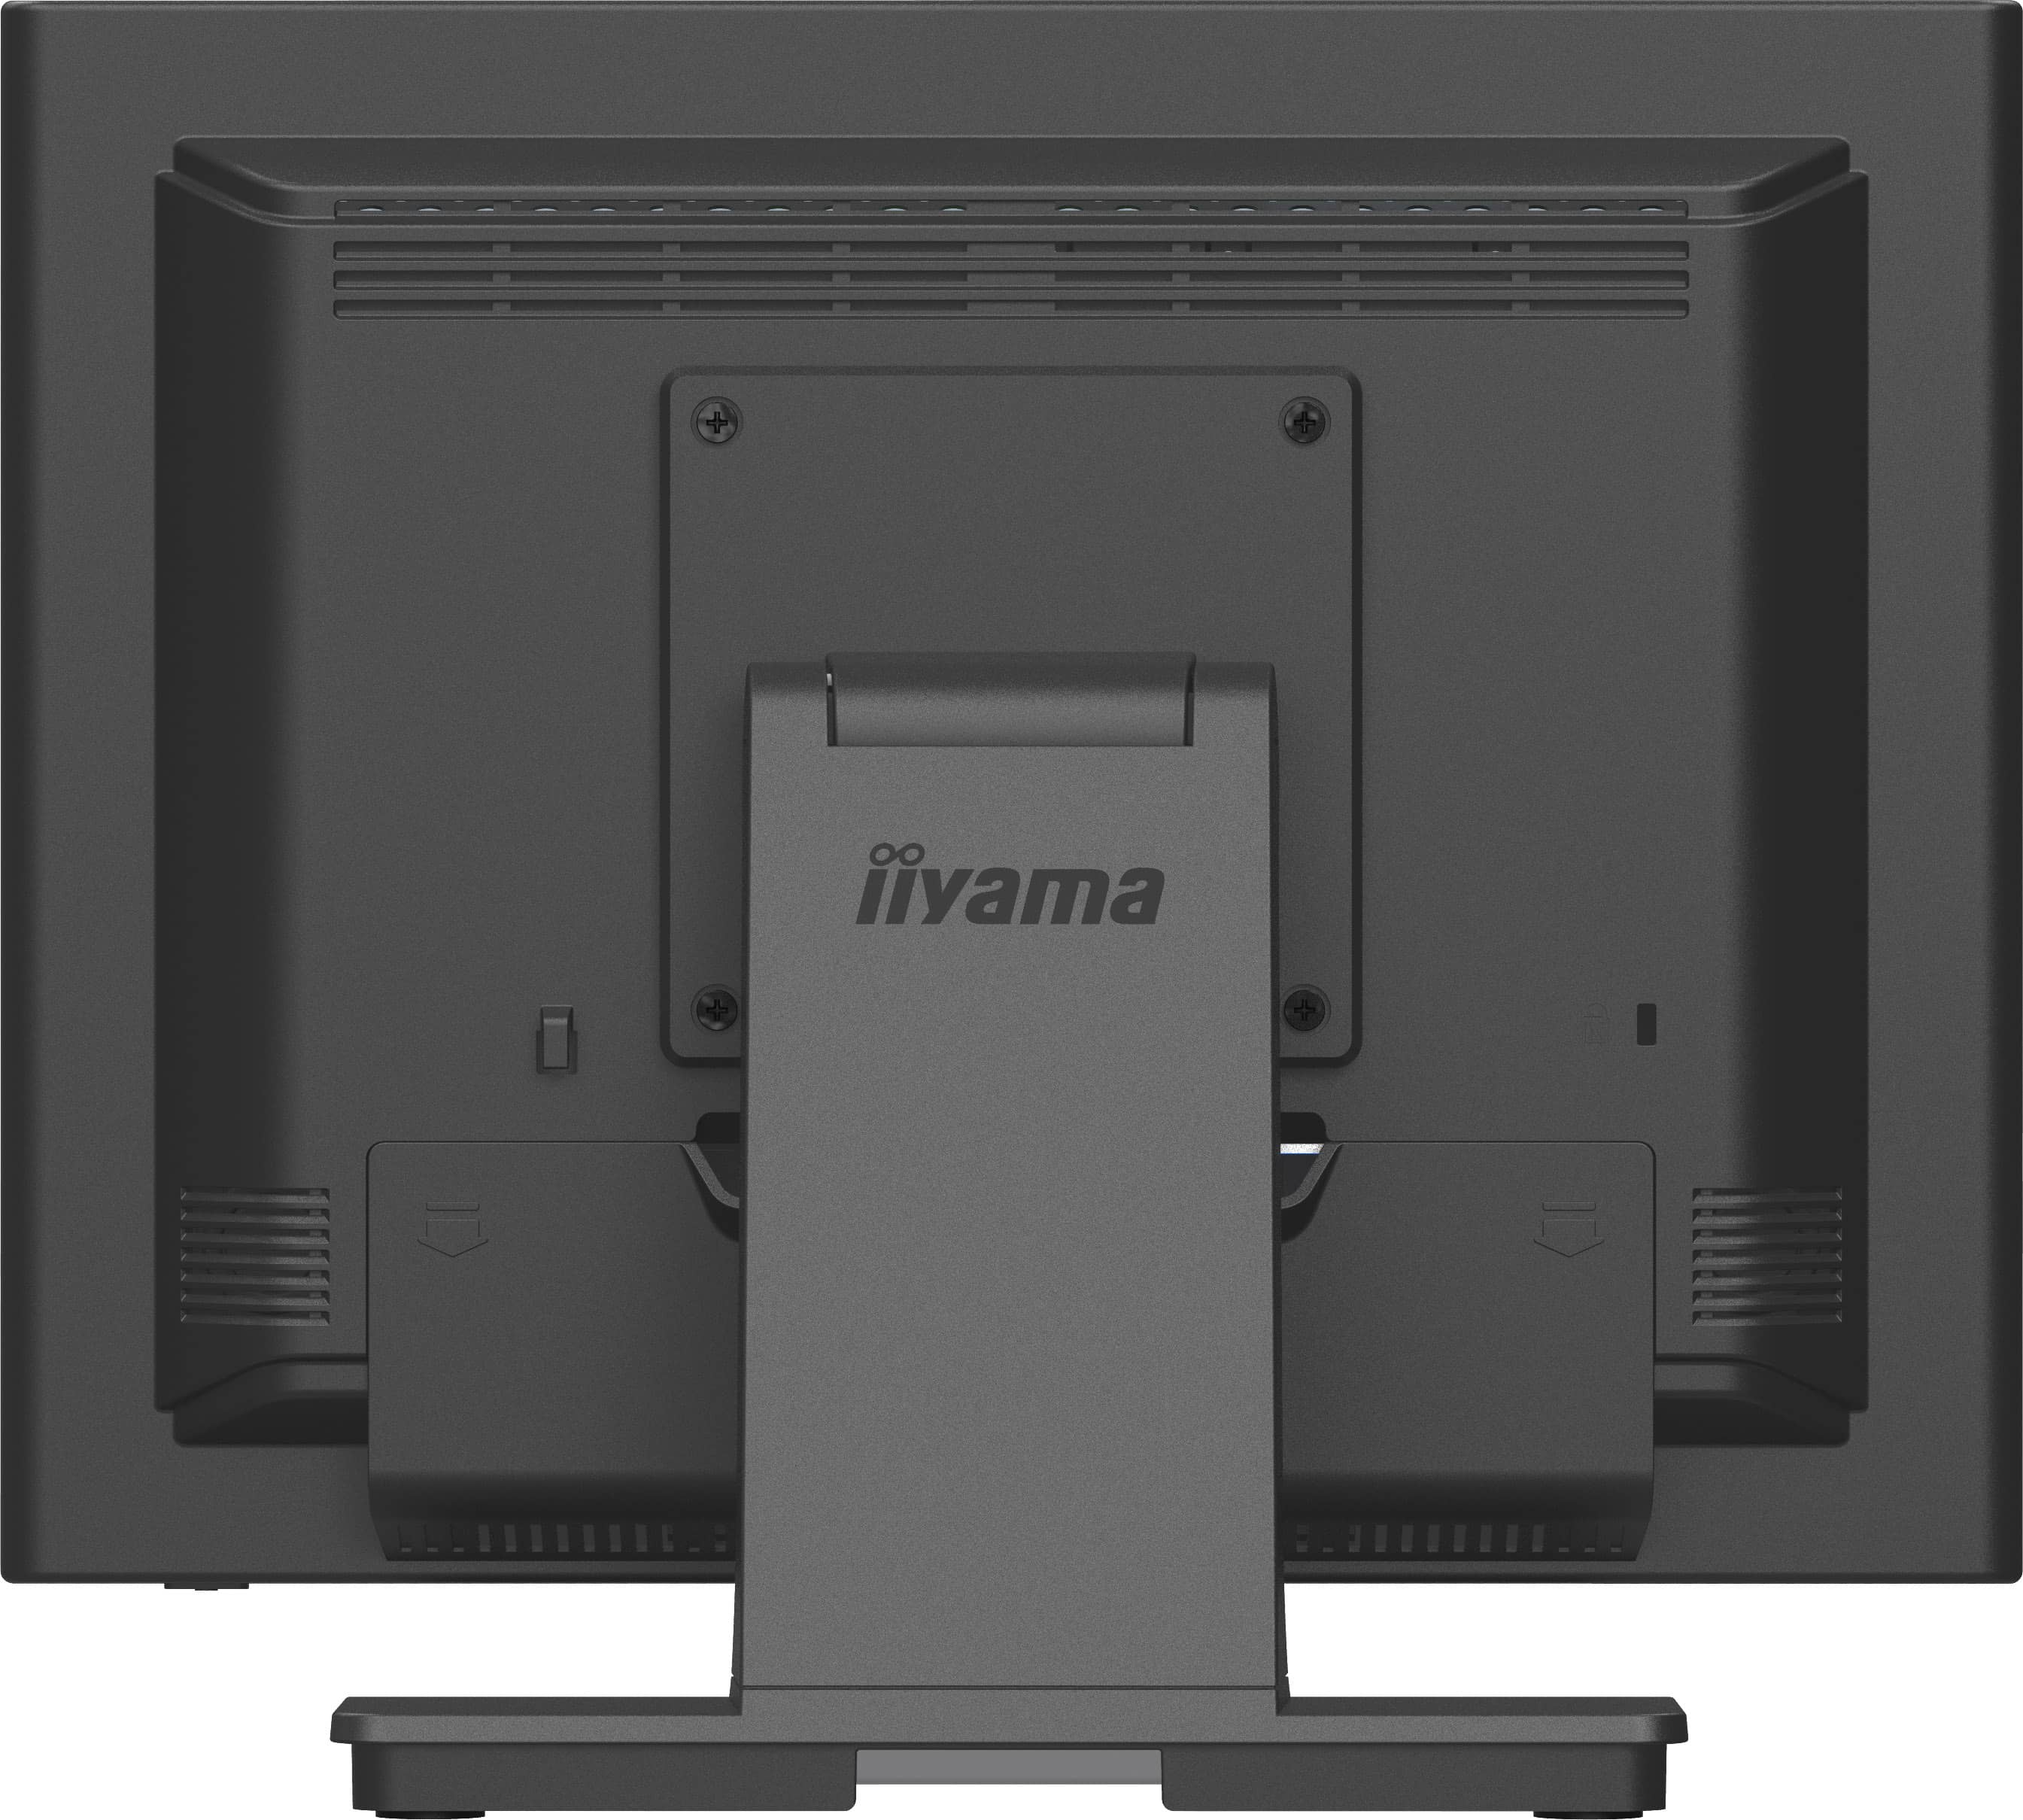 Iiyama ProLite T1531SR-B1S | 15" | Touchmonitor mit 5-Wire resistive Touchtechnologie